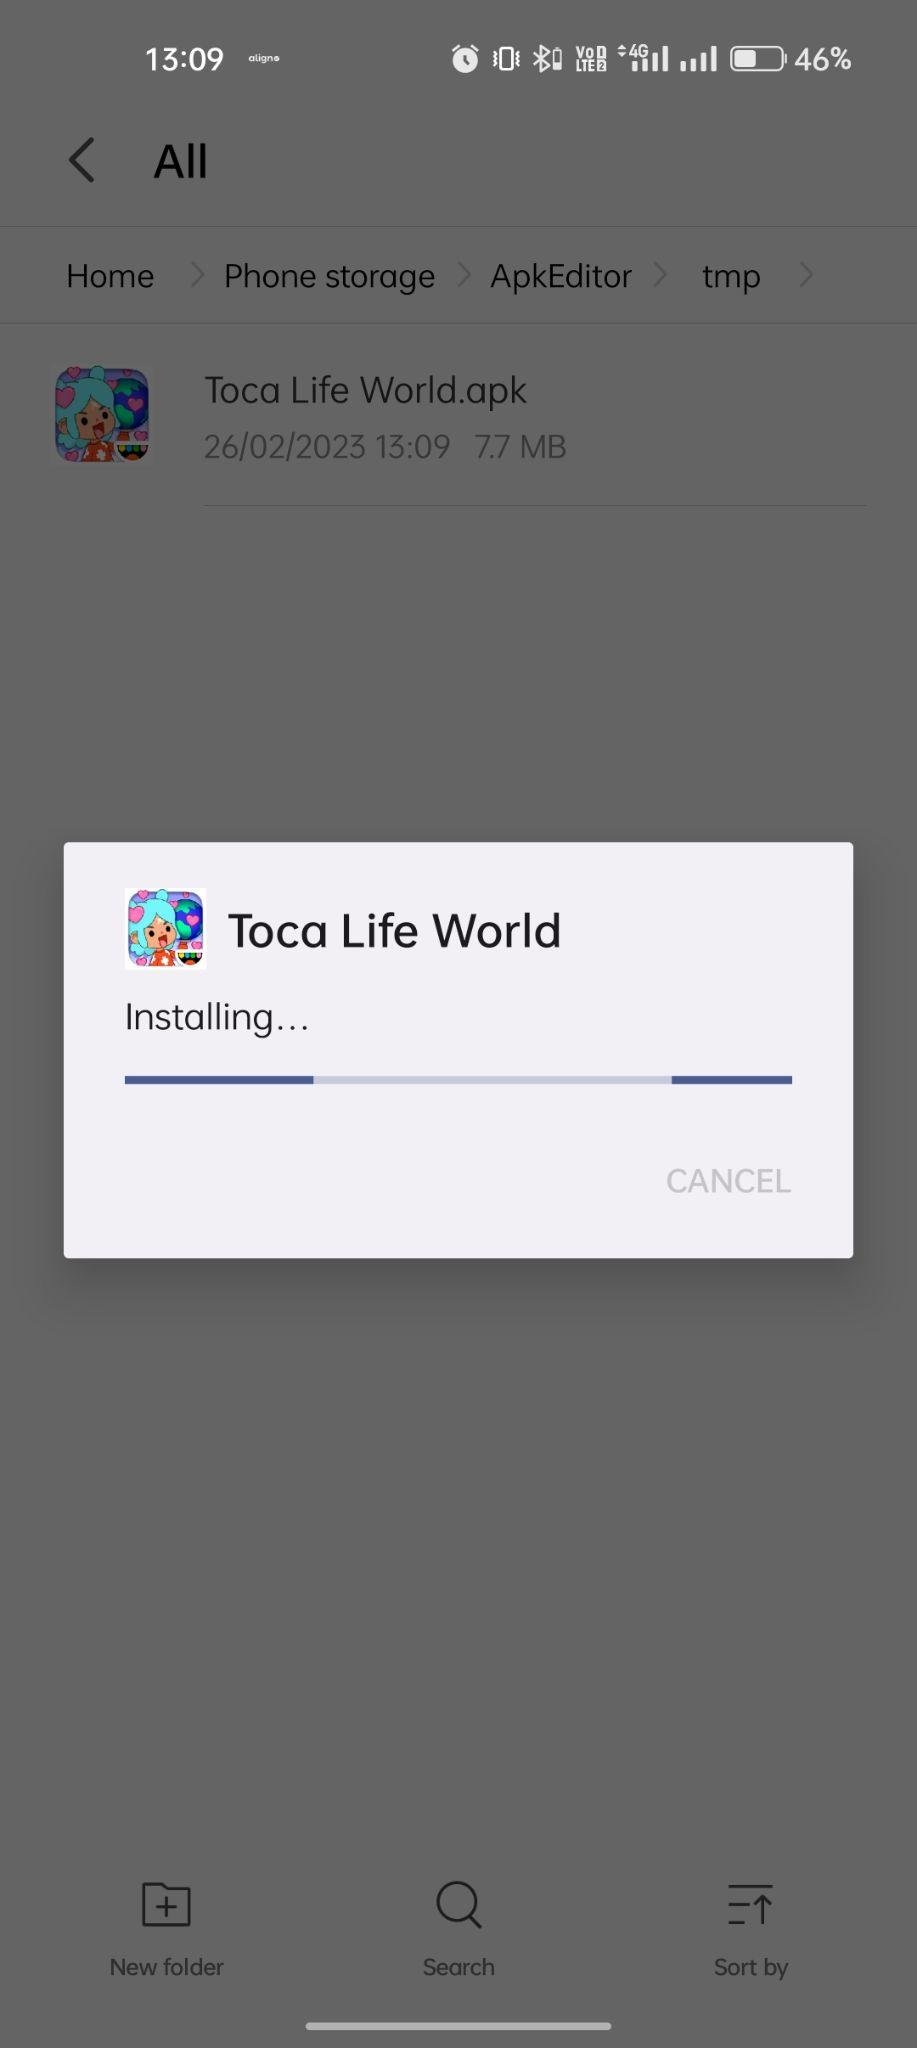 Toca Life World apk installing